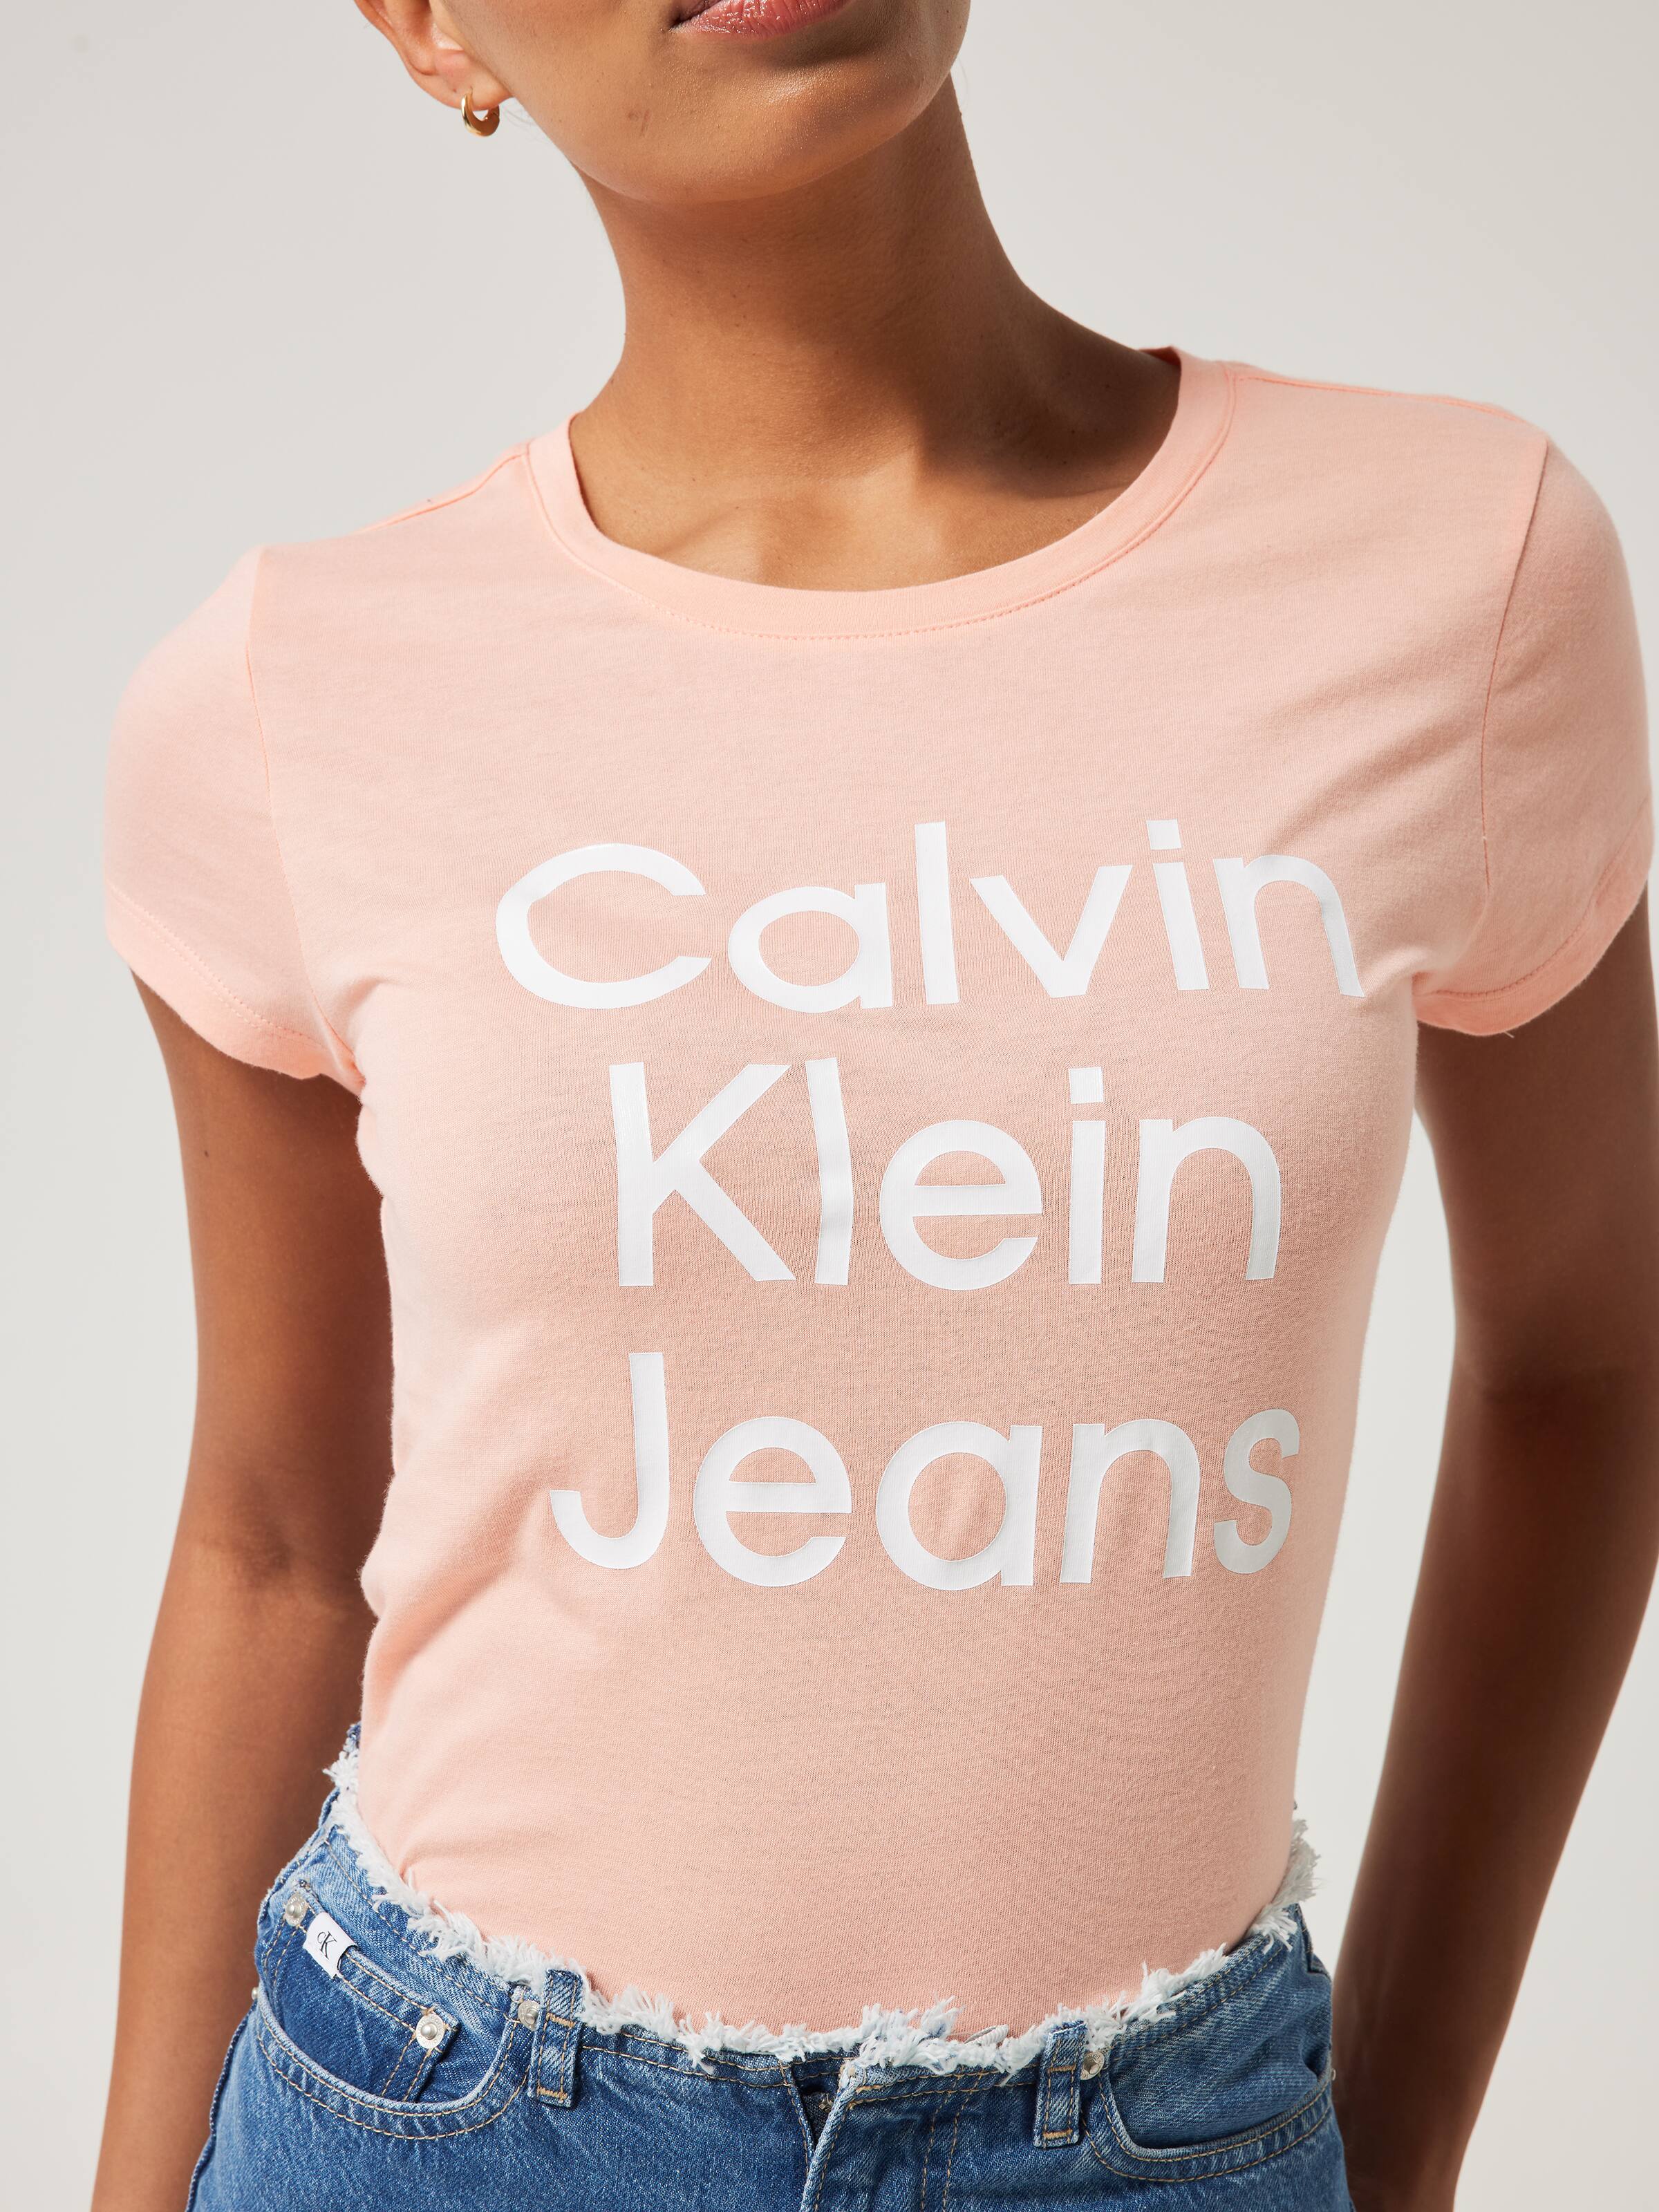 Buy Calvin Klein Jeans Women Light Blue Turtle Neck Embroidered